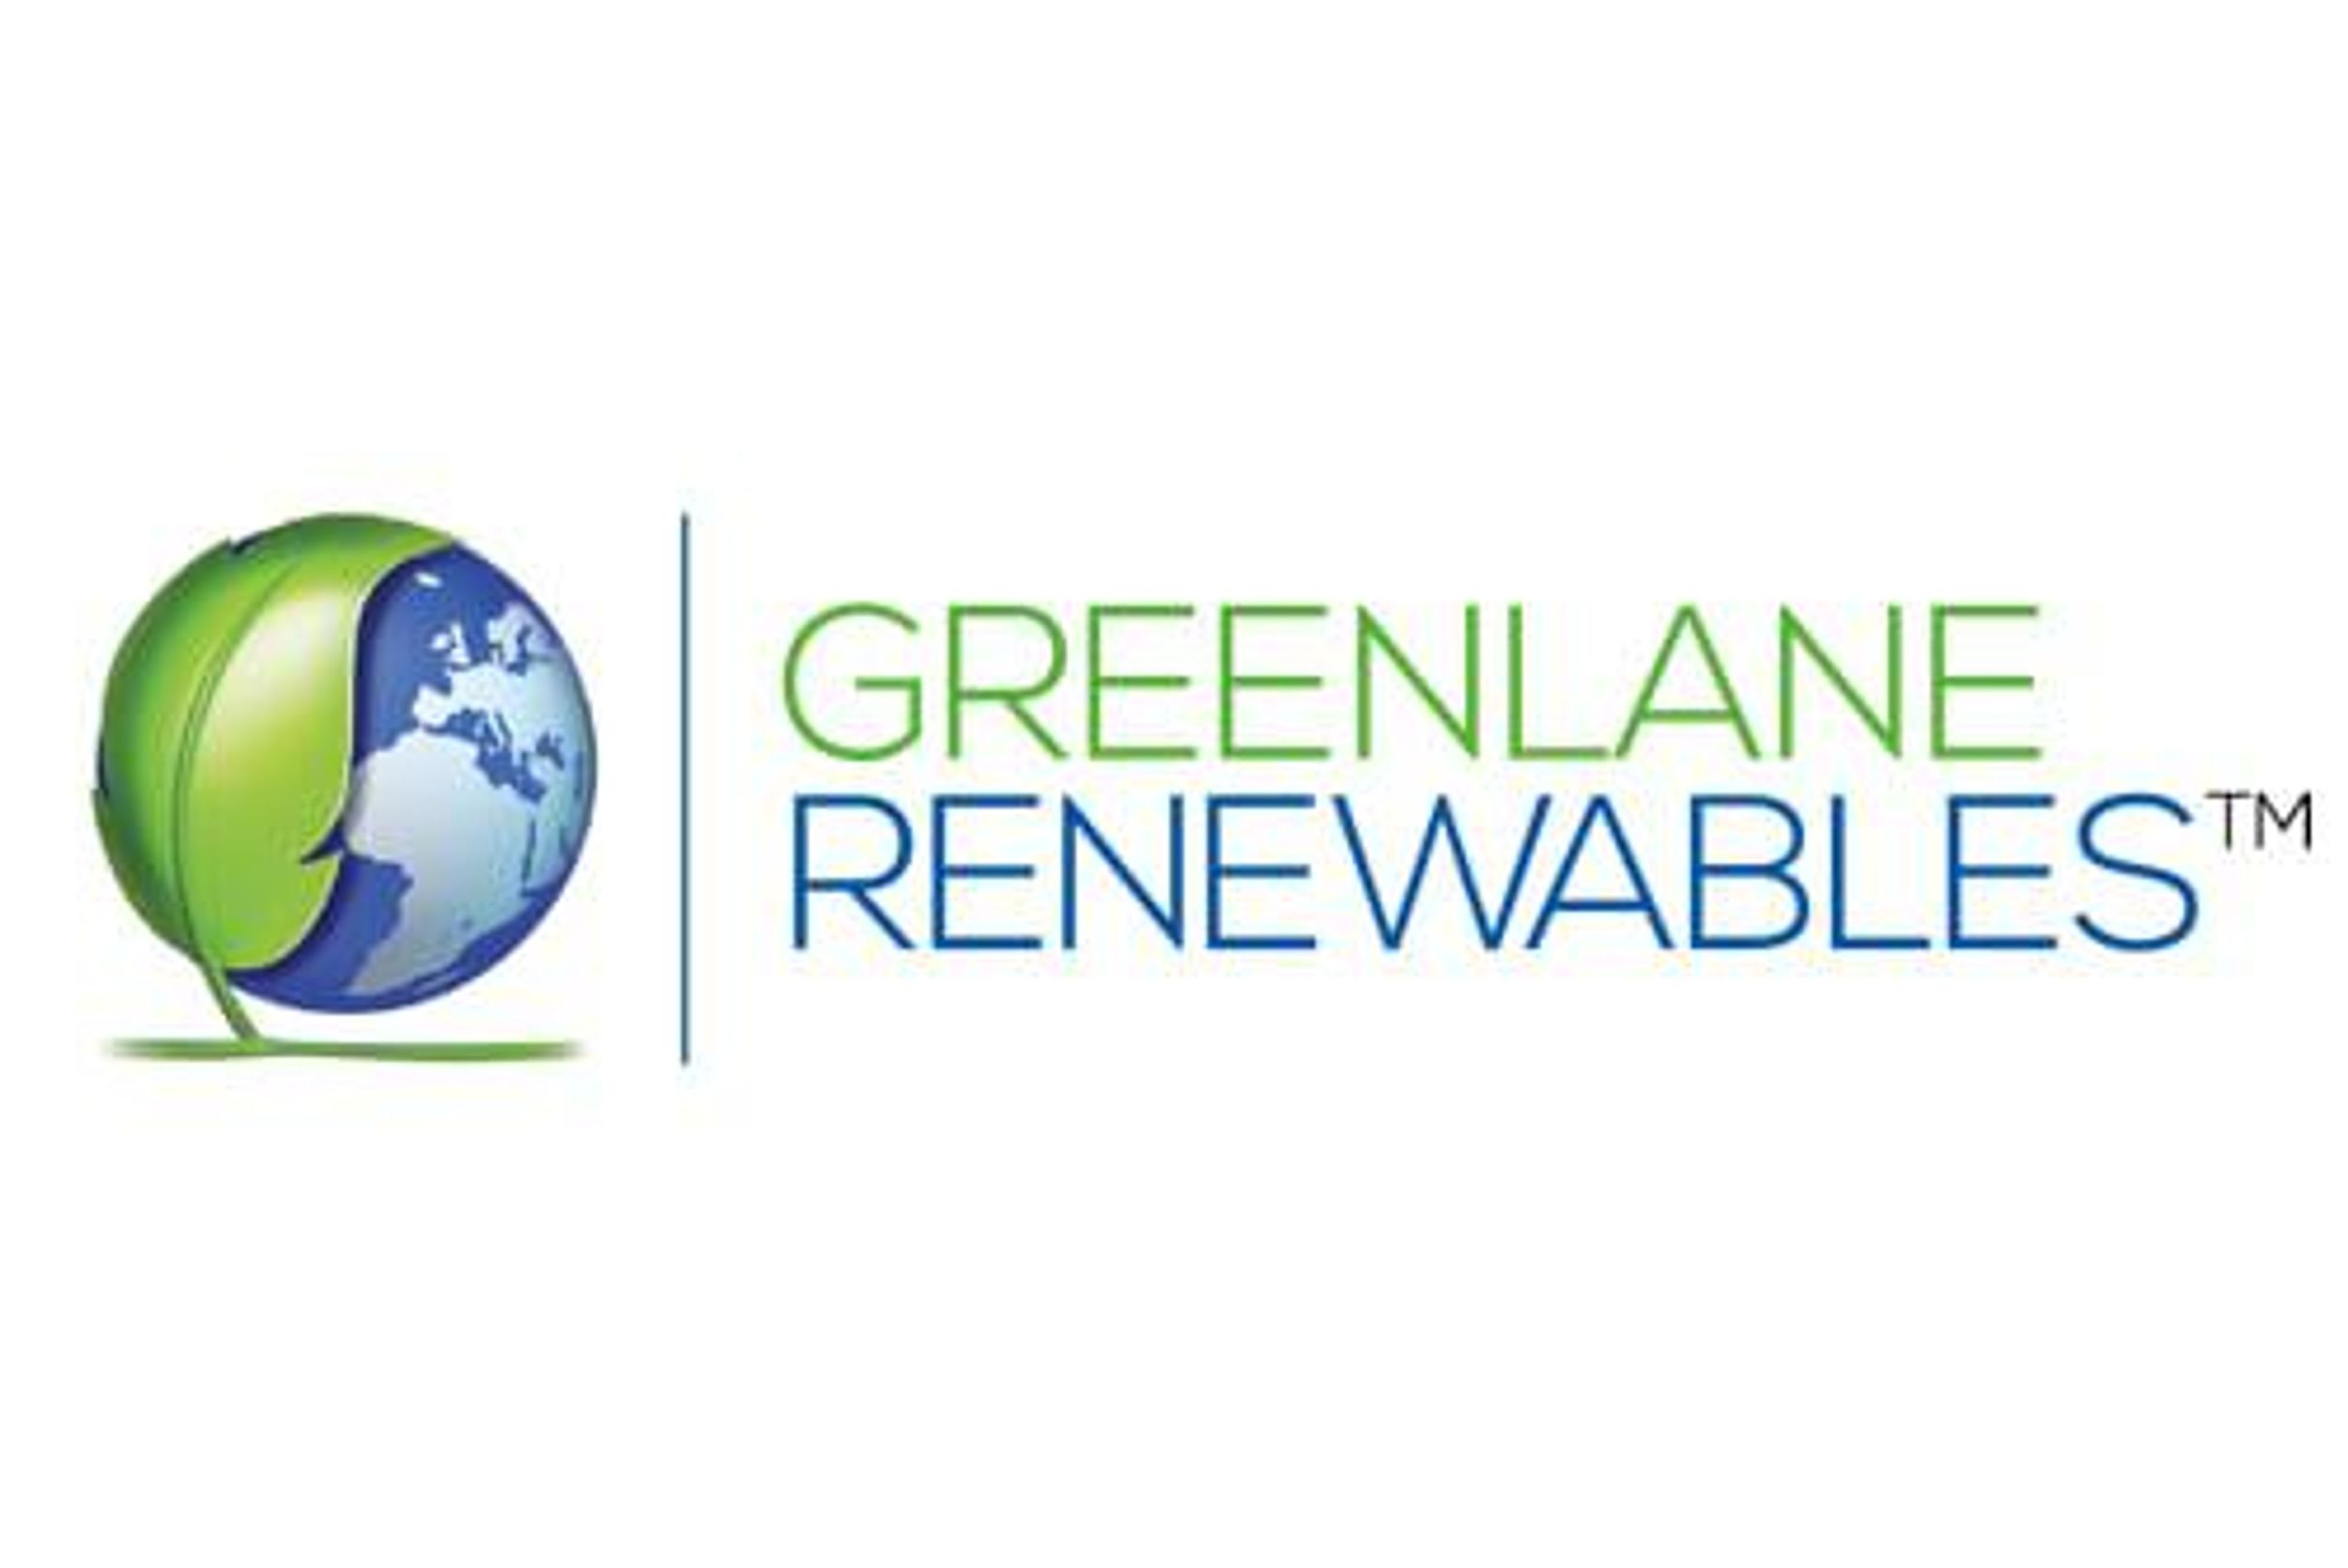 greenlane renewables stock